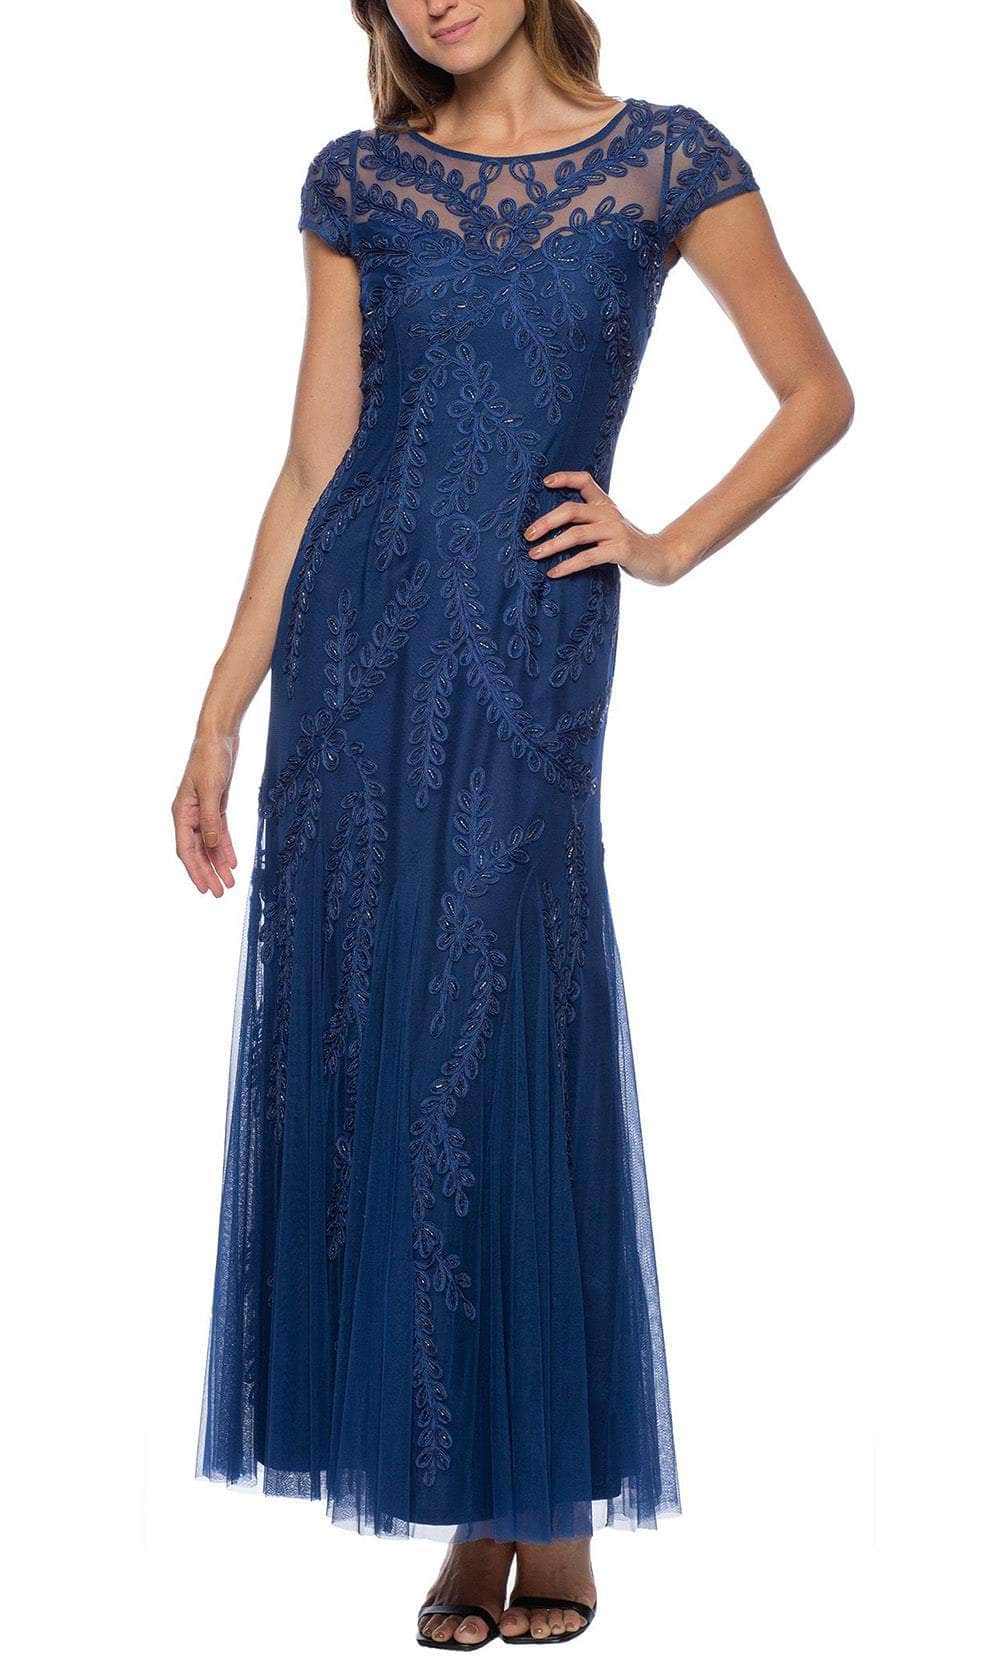 Marina 267853 - Cap Sleeve Embellished Evening Gown
